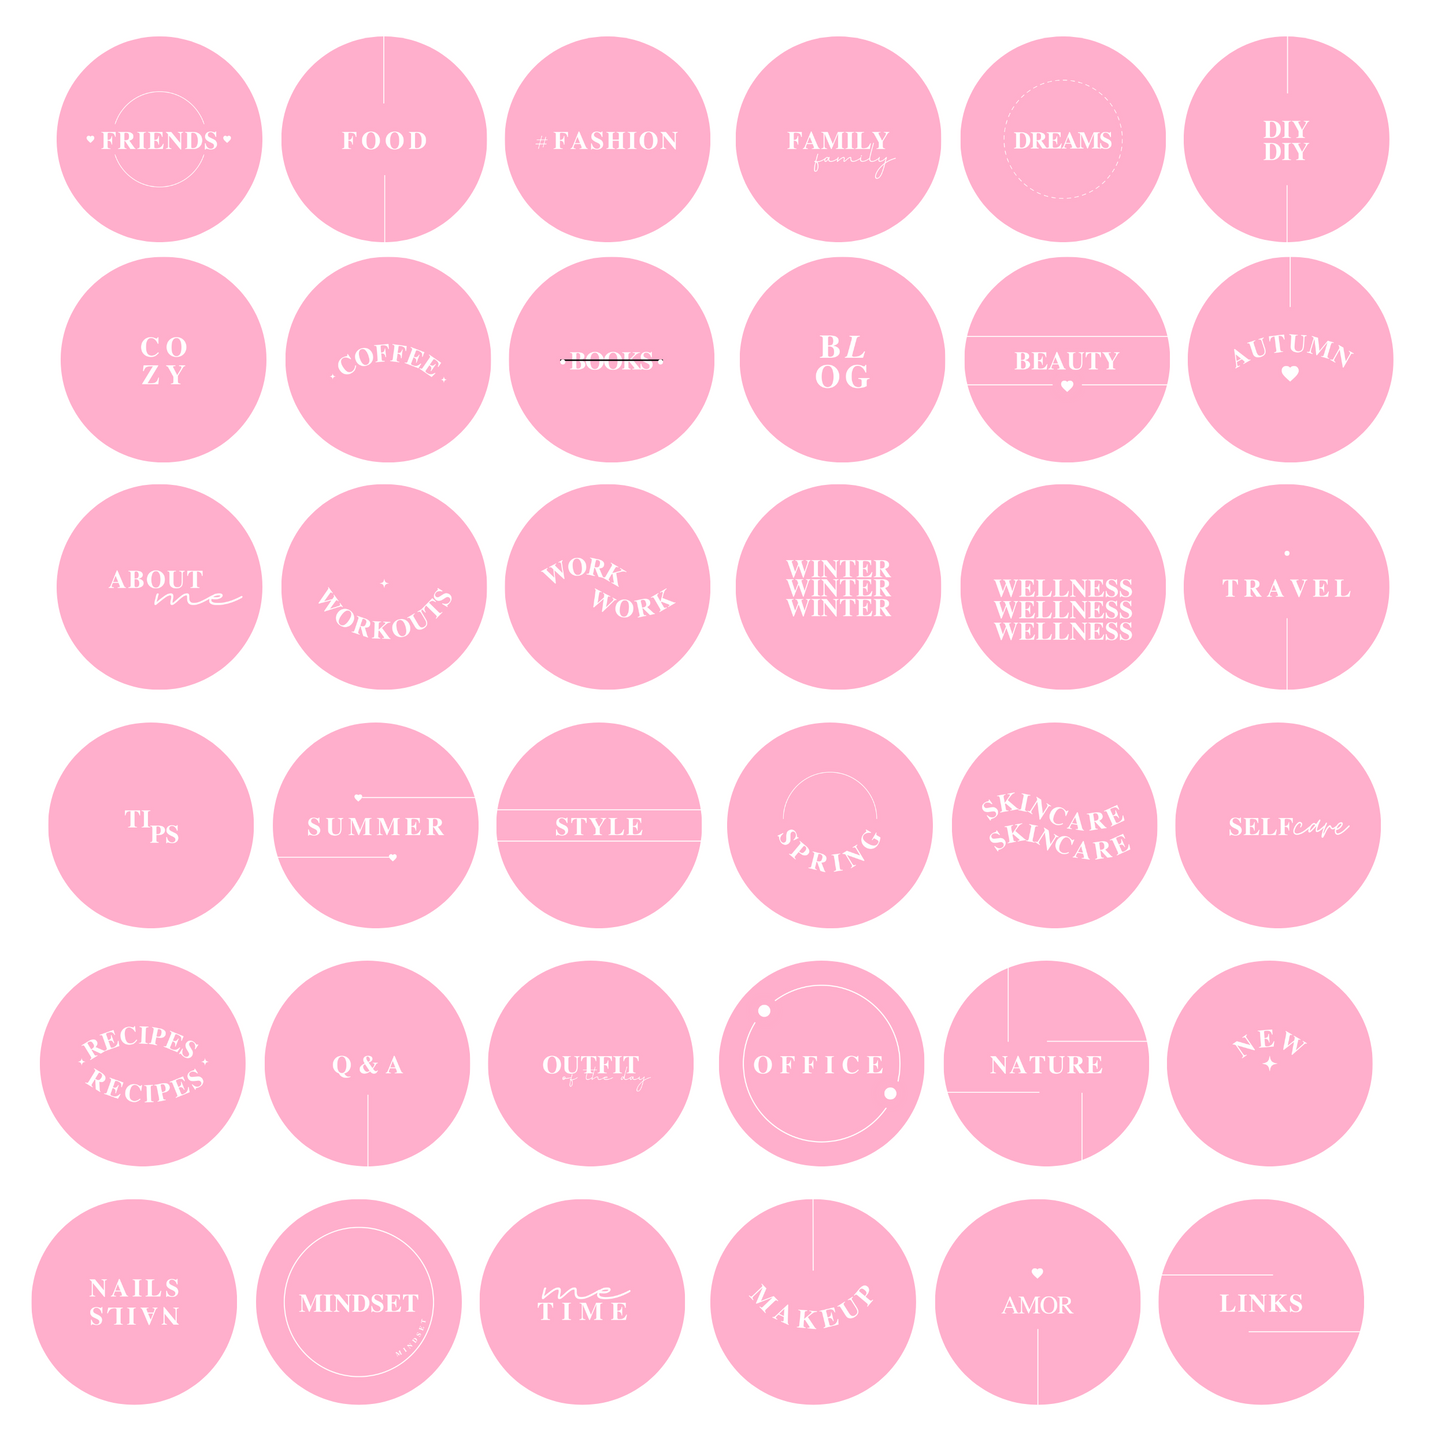 45 iconos rosas - Destacados para Instagram Stories Editables (Canva)